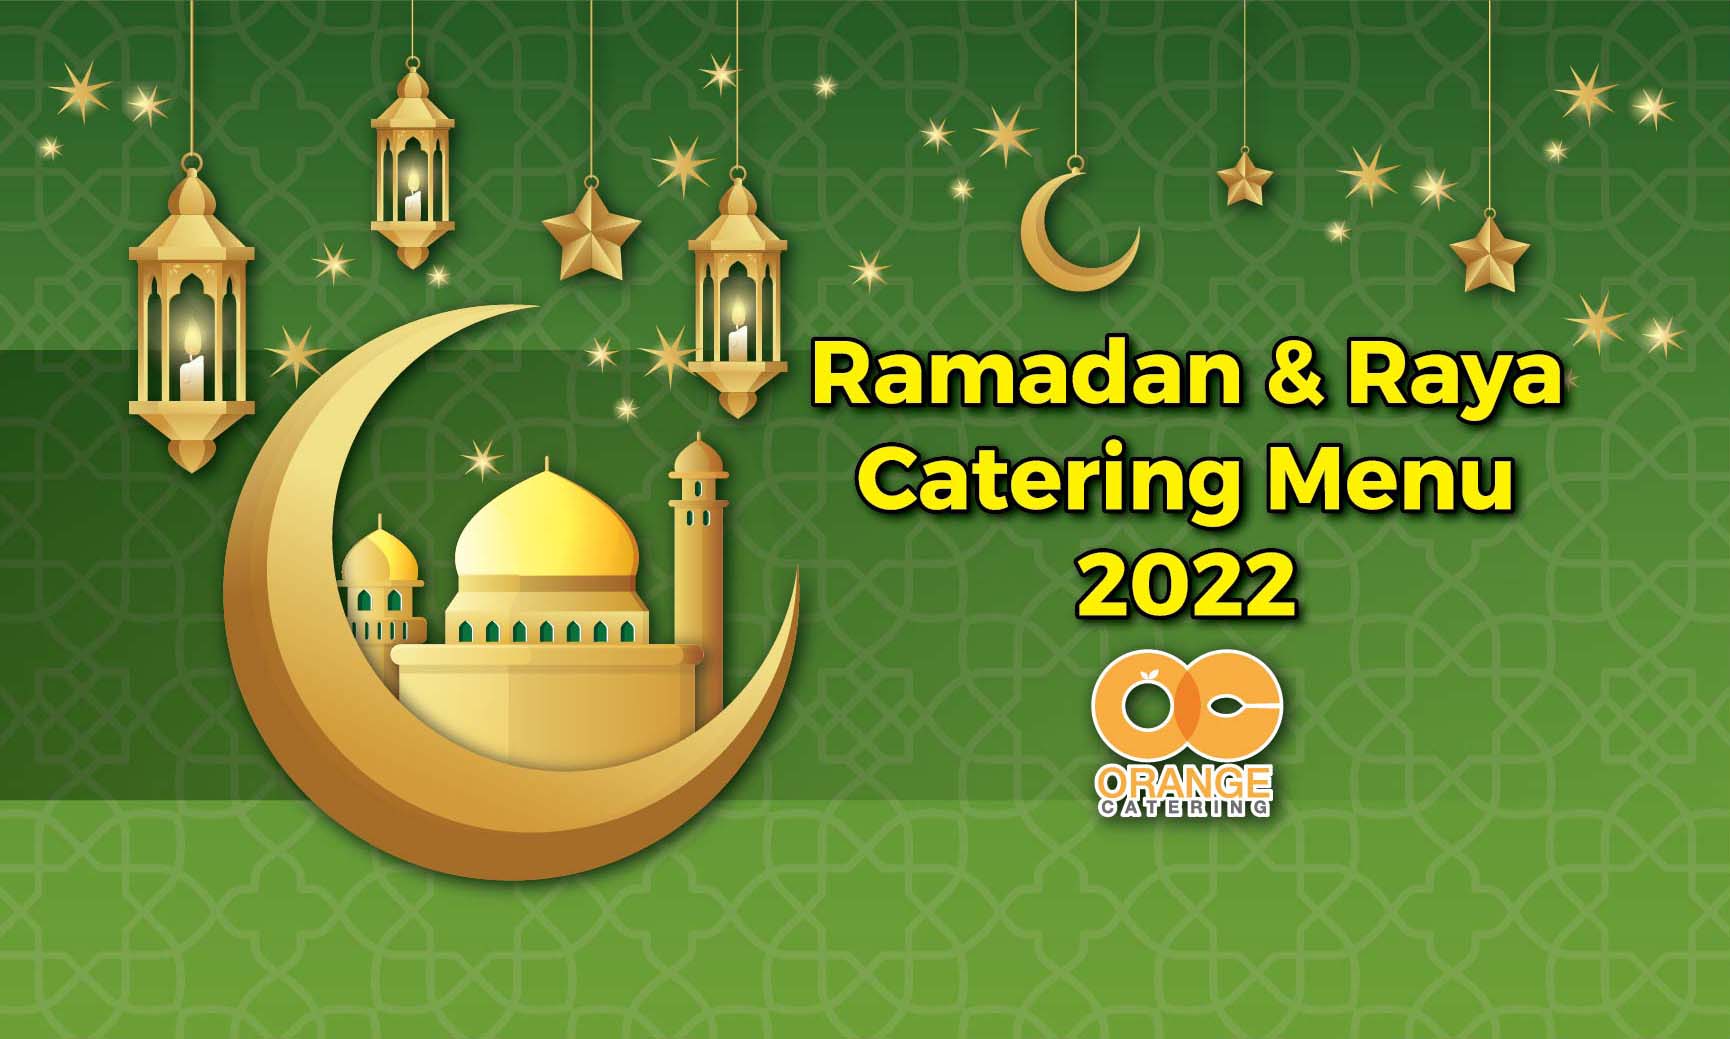 Ramadan Menu 2022 by Orange Catering